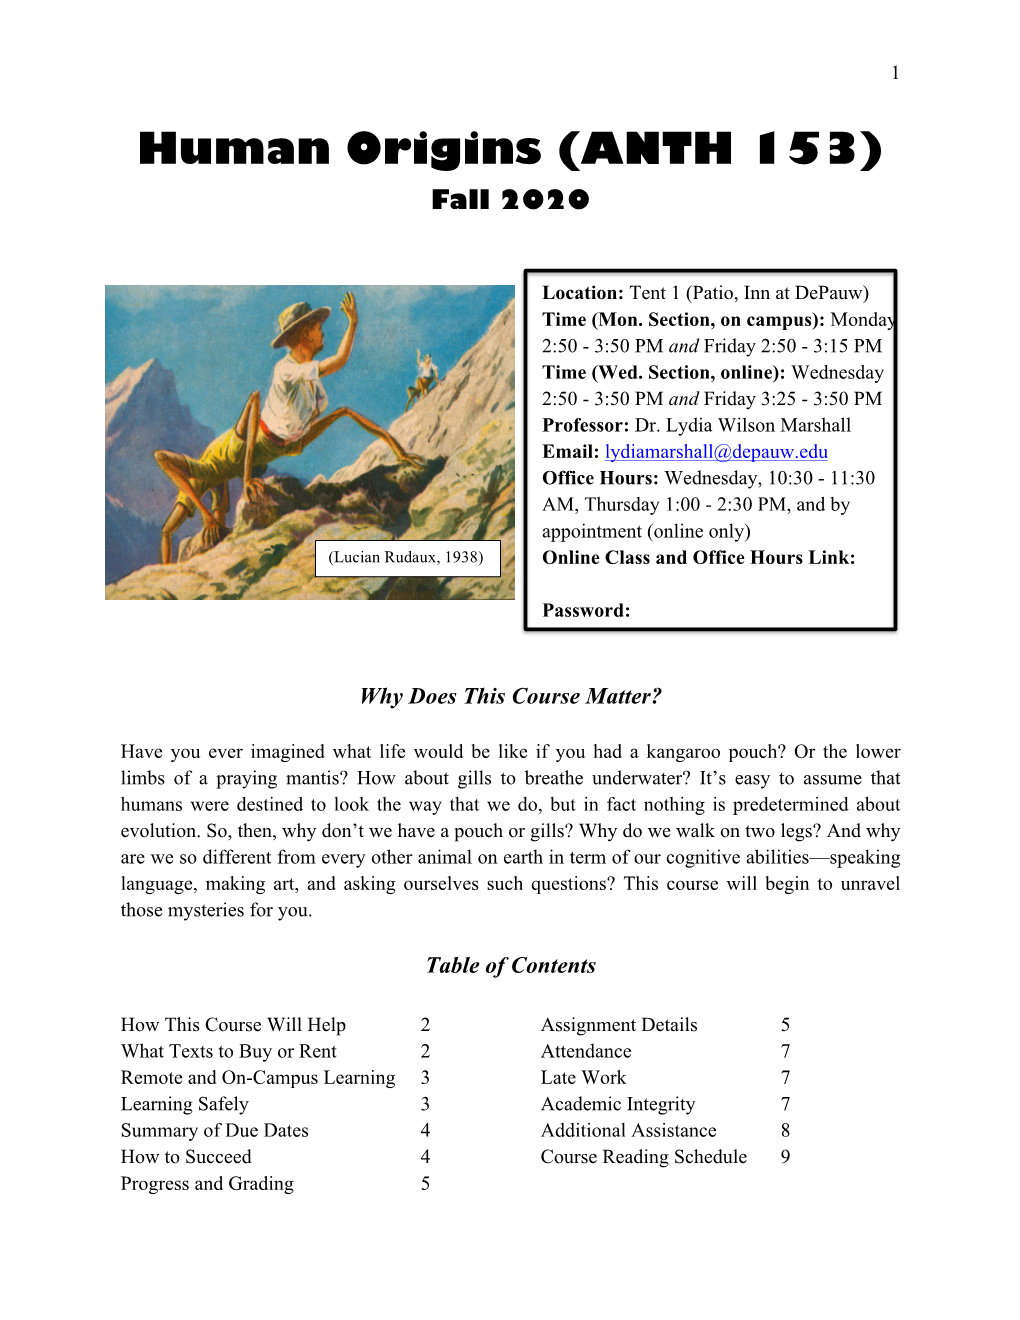 Human Origins (ANTH 153) Fall 2020